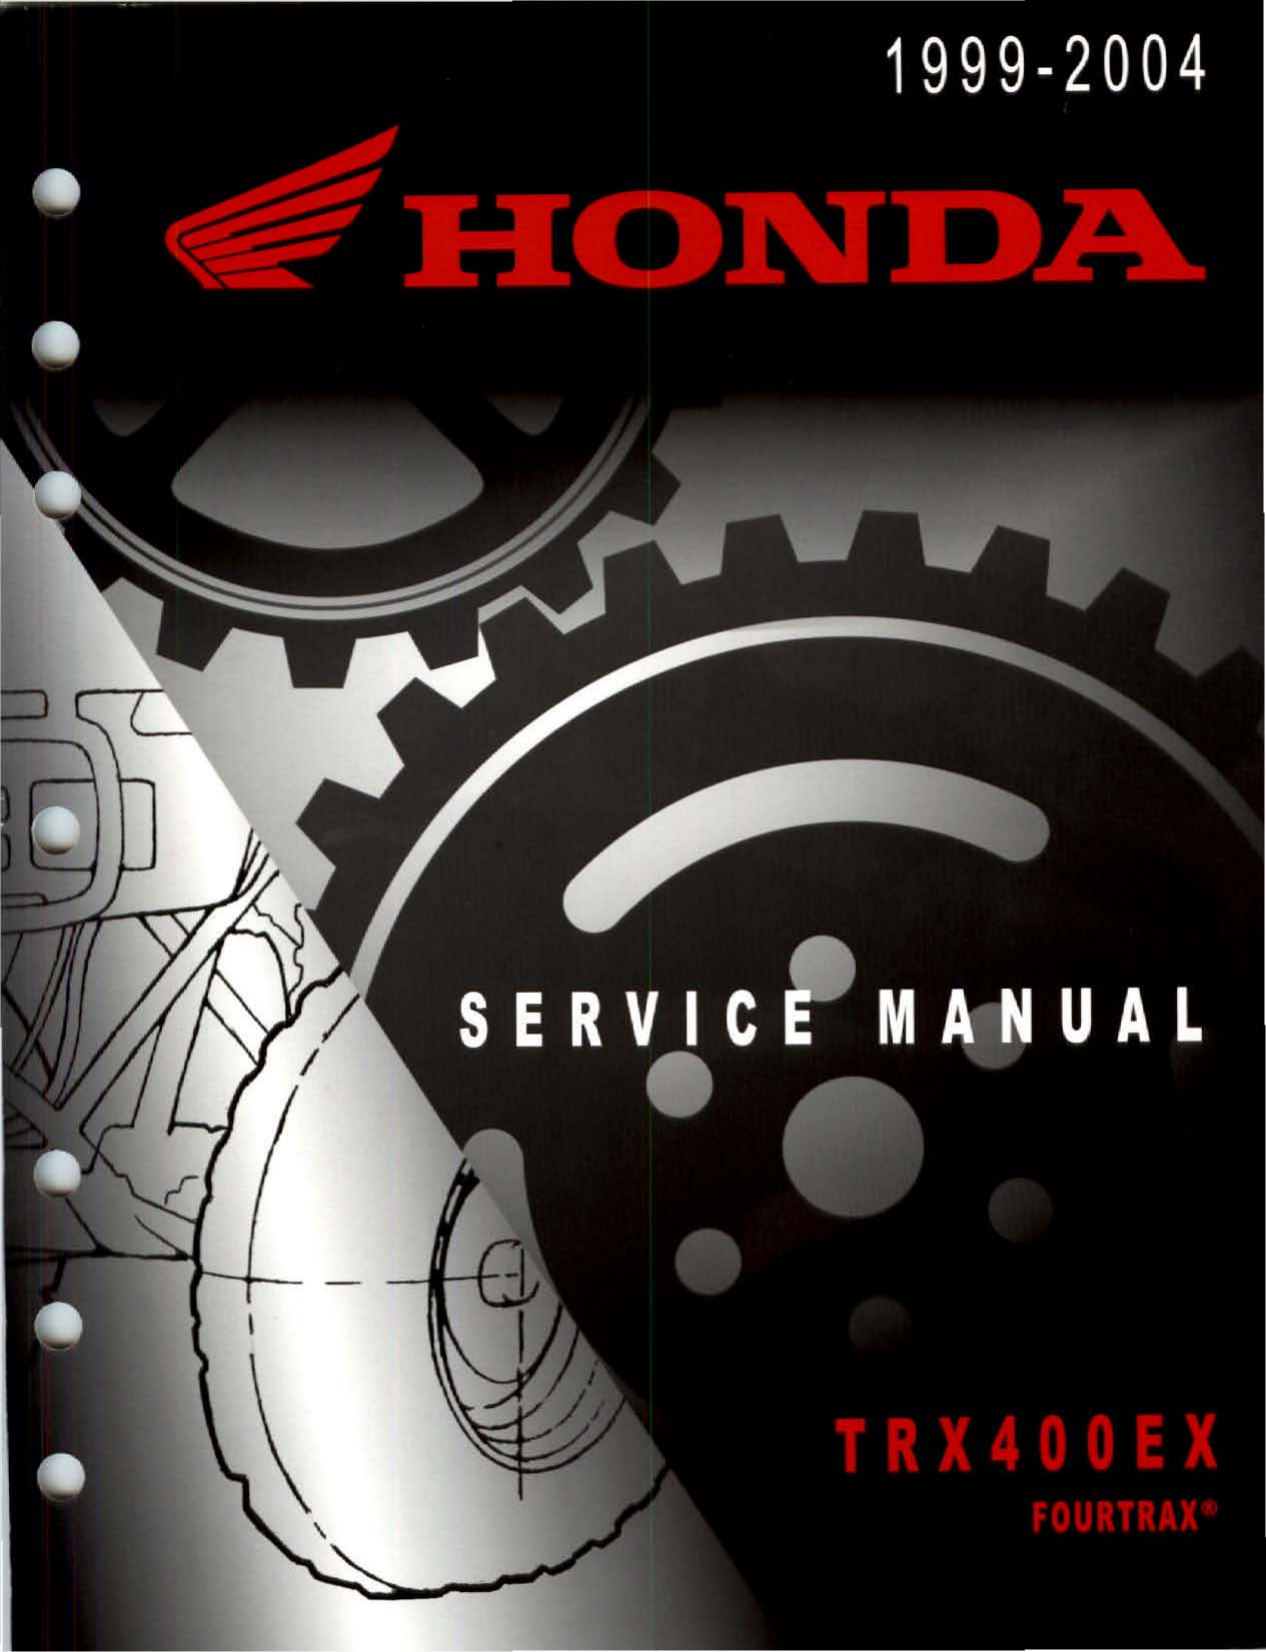 1999-2004 Honda TRX400ex service manual Preview image 1